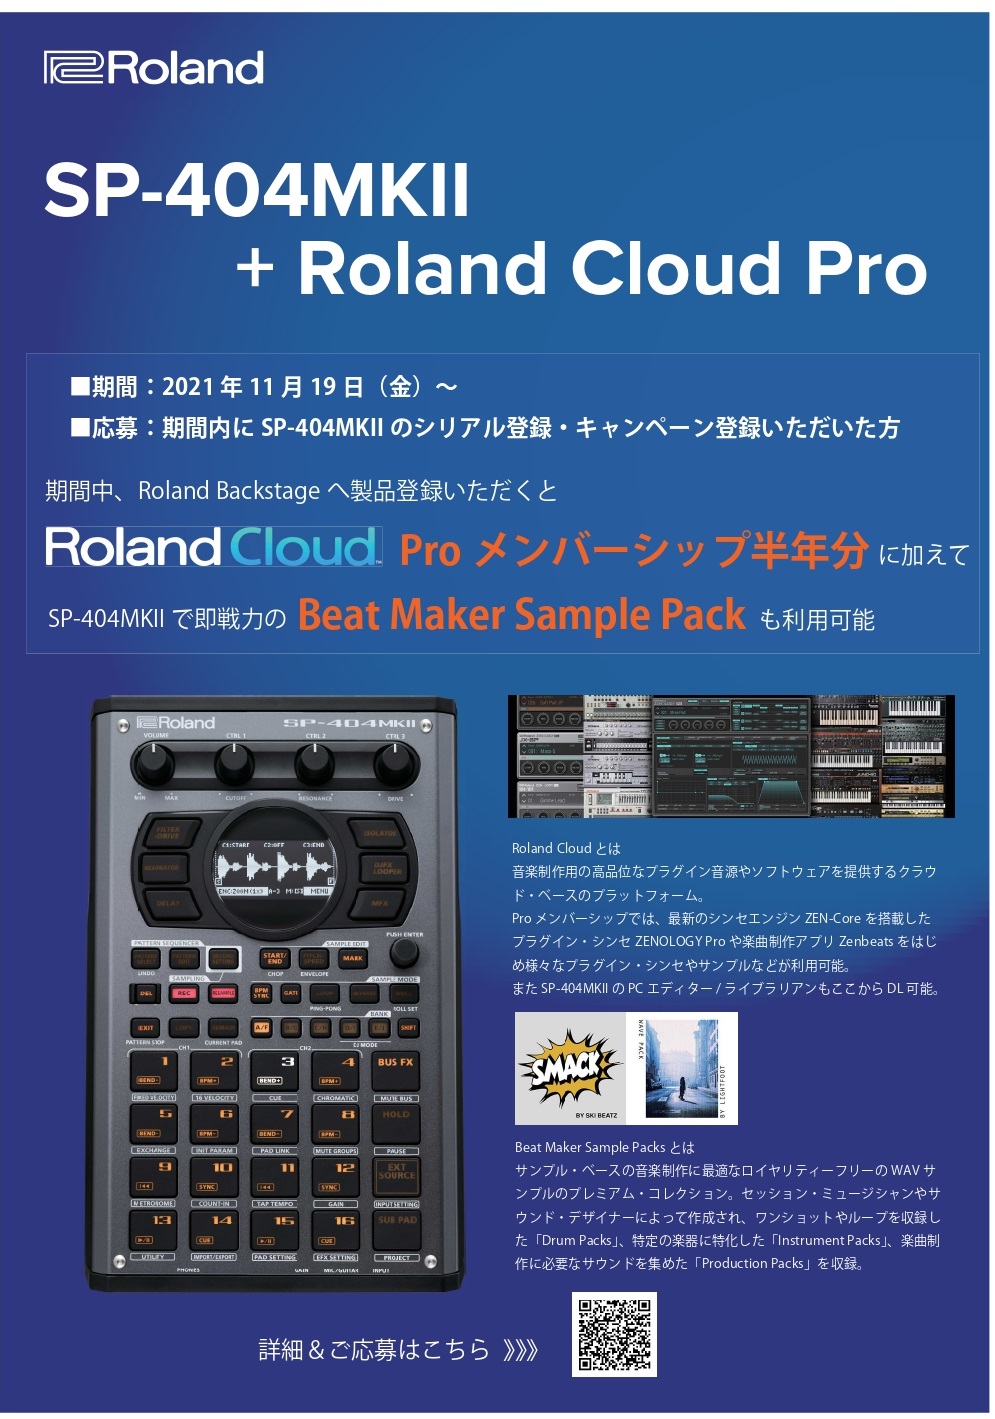 Roland SP-404 mkⅡ好評発売中！約12年ぶりの待望の次世代サンプラー 